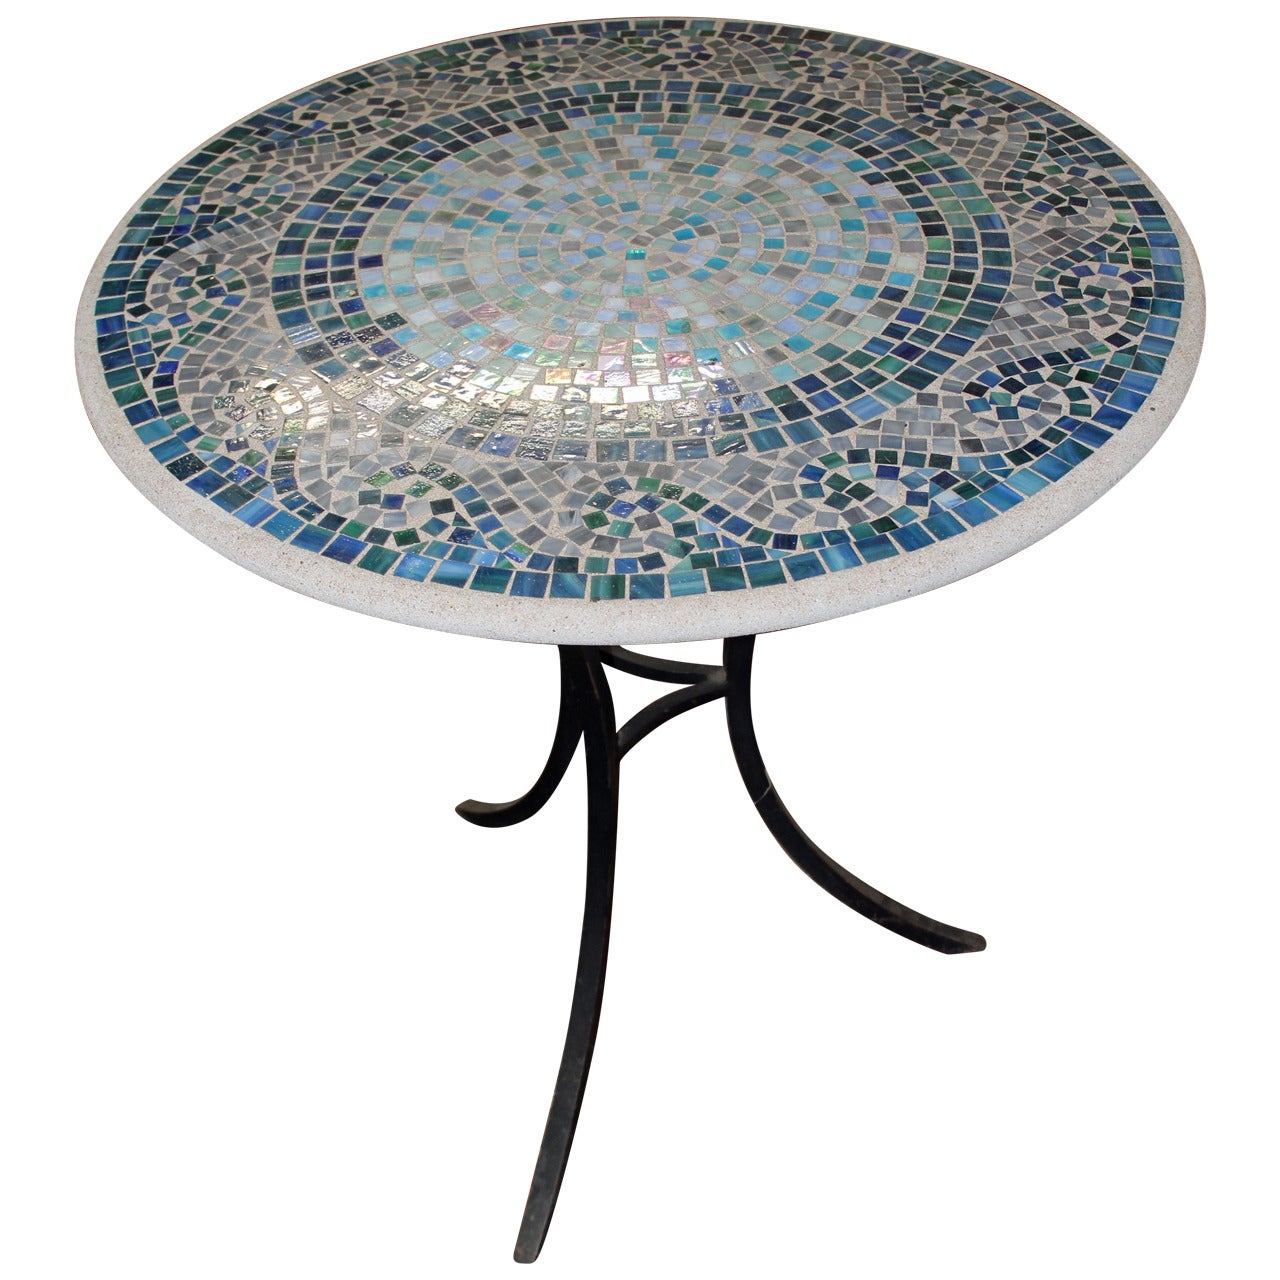 Whimsical Iridescent Mosaic Breakfast Table on Blackened Steel Base